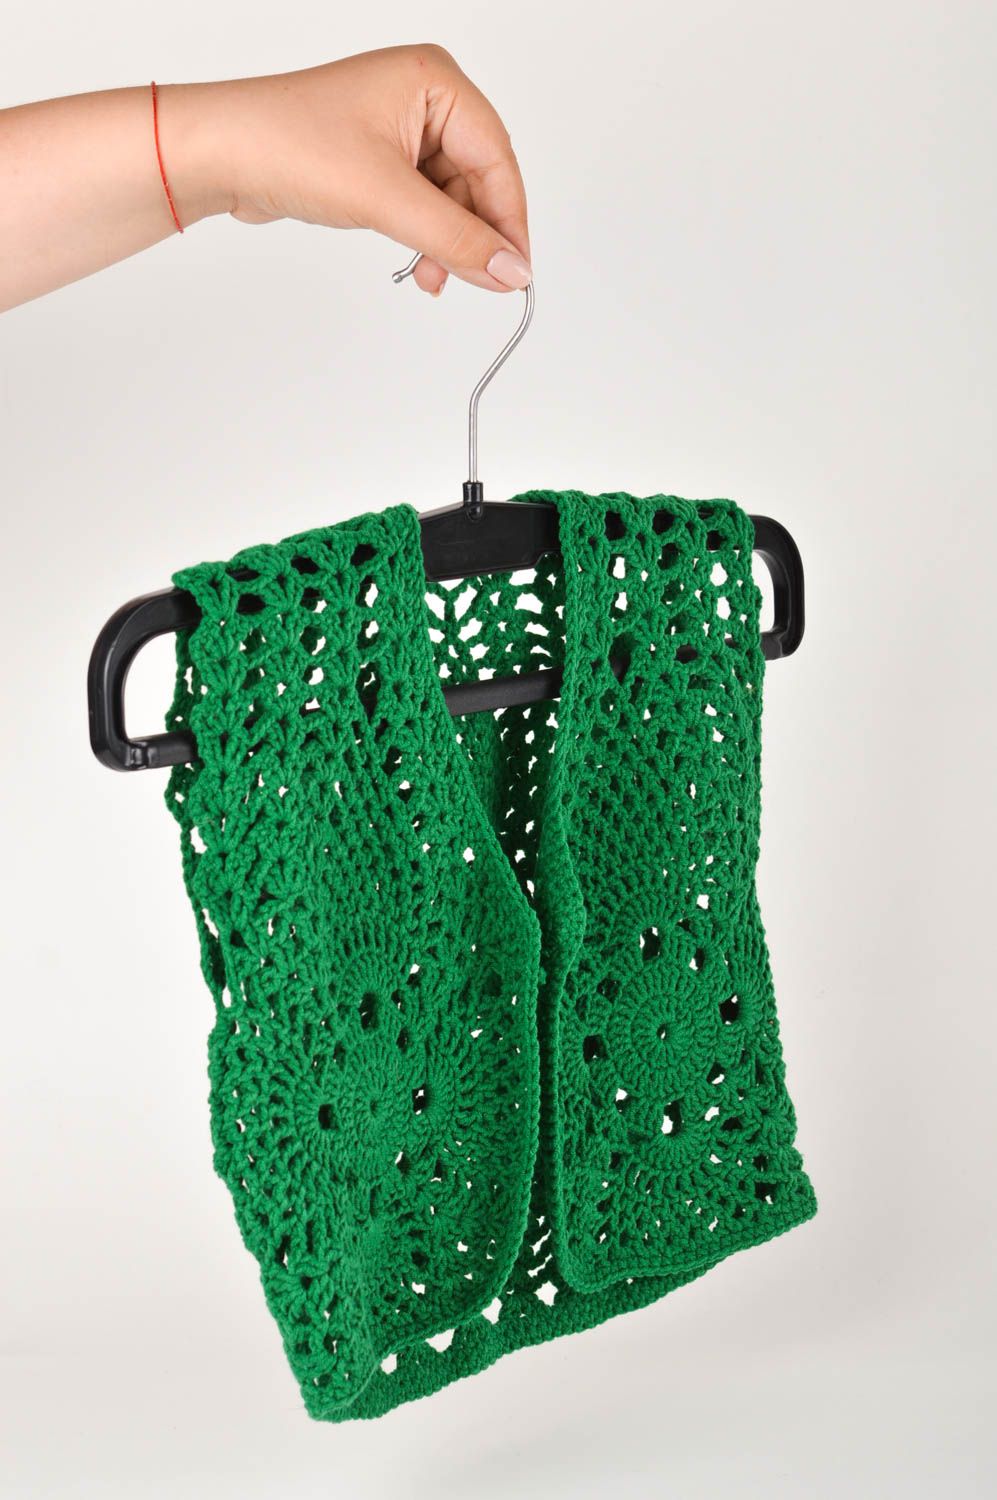 Unusual handmade crochet vest childrens clothes fashion accessories gift ideas photo 2